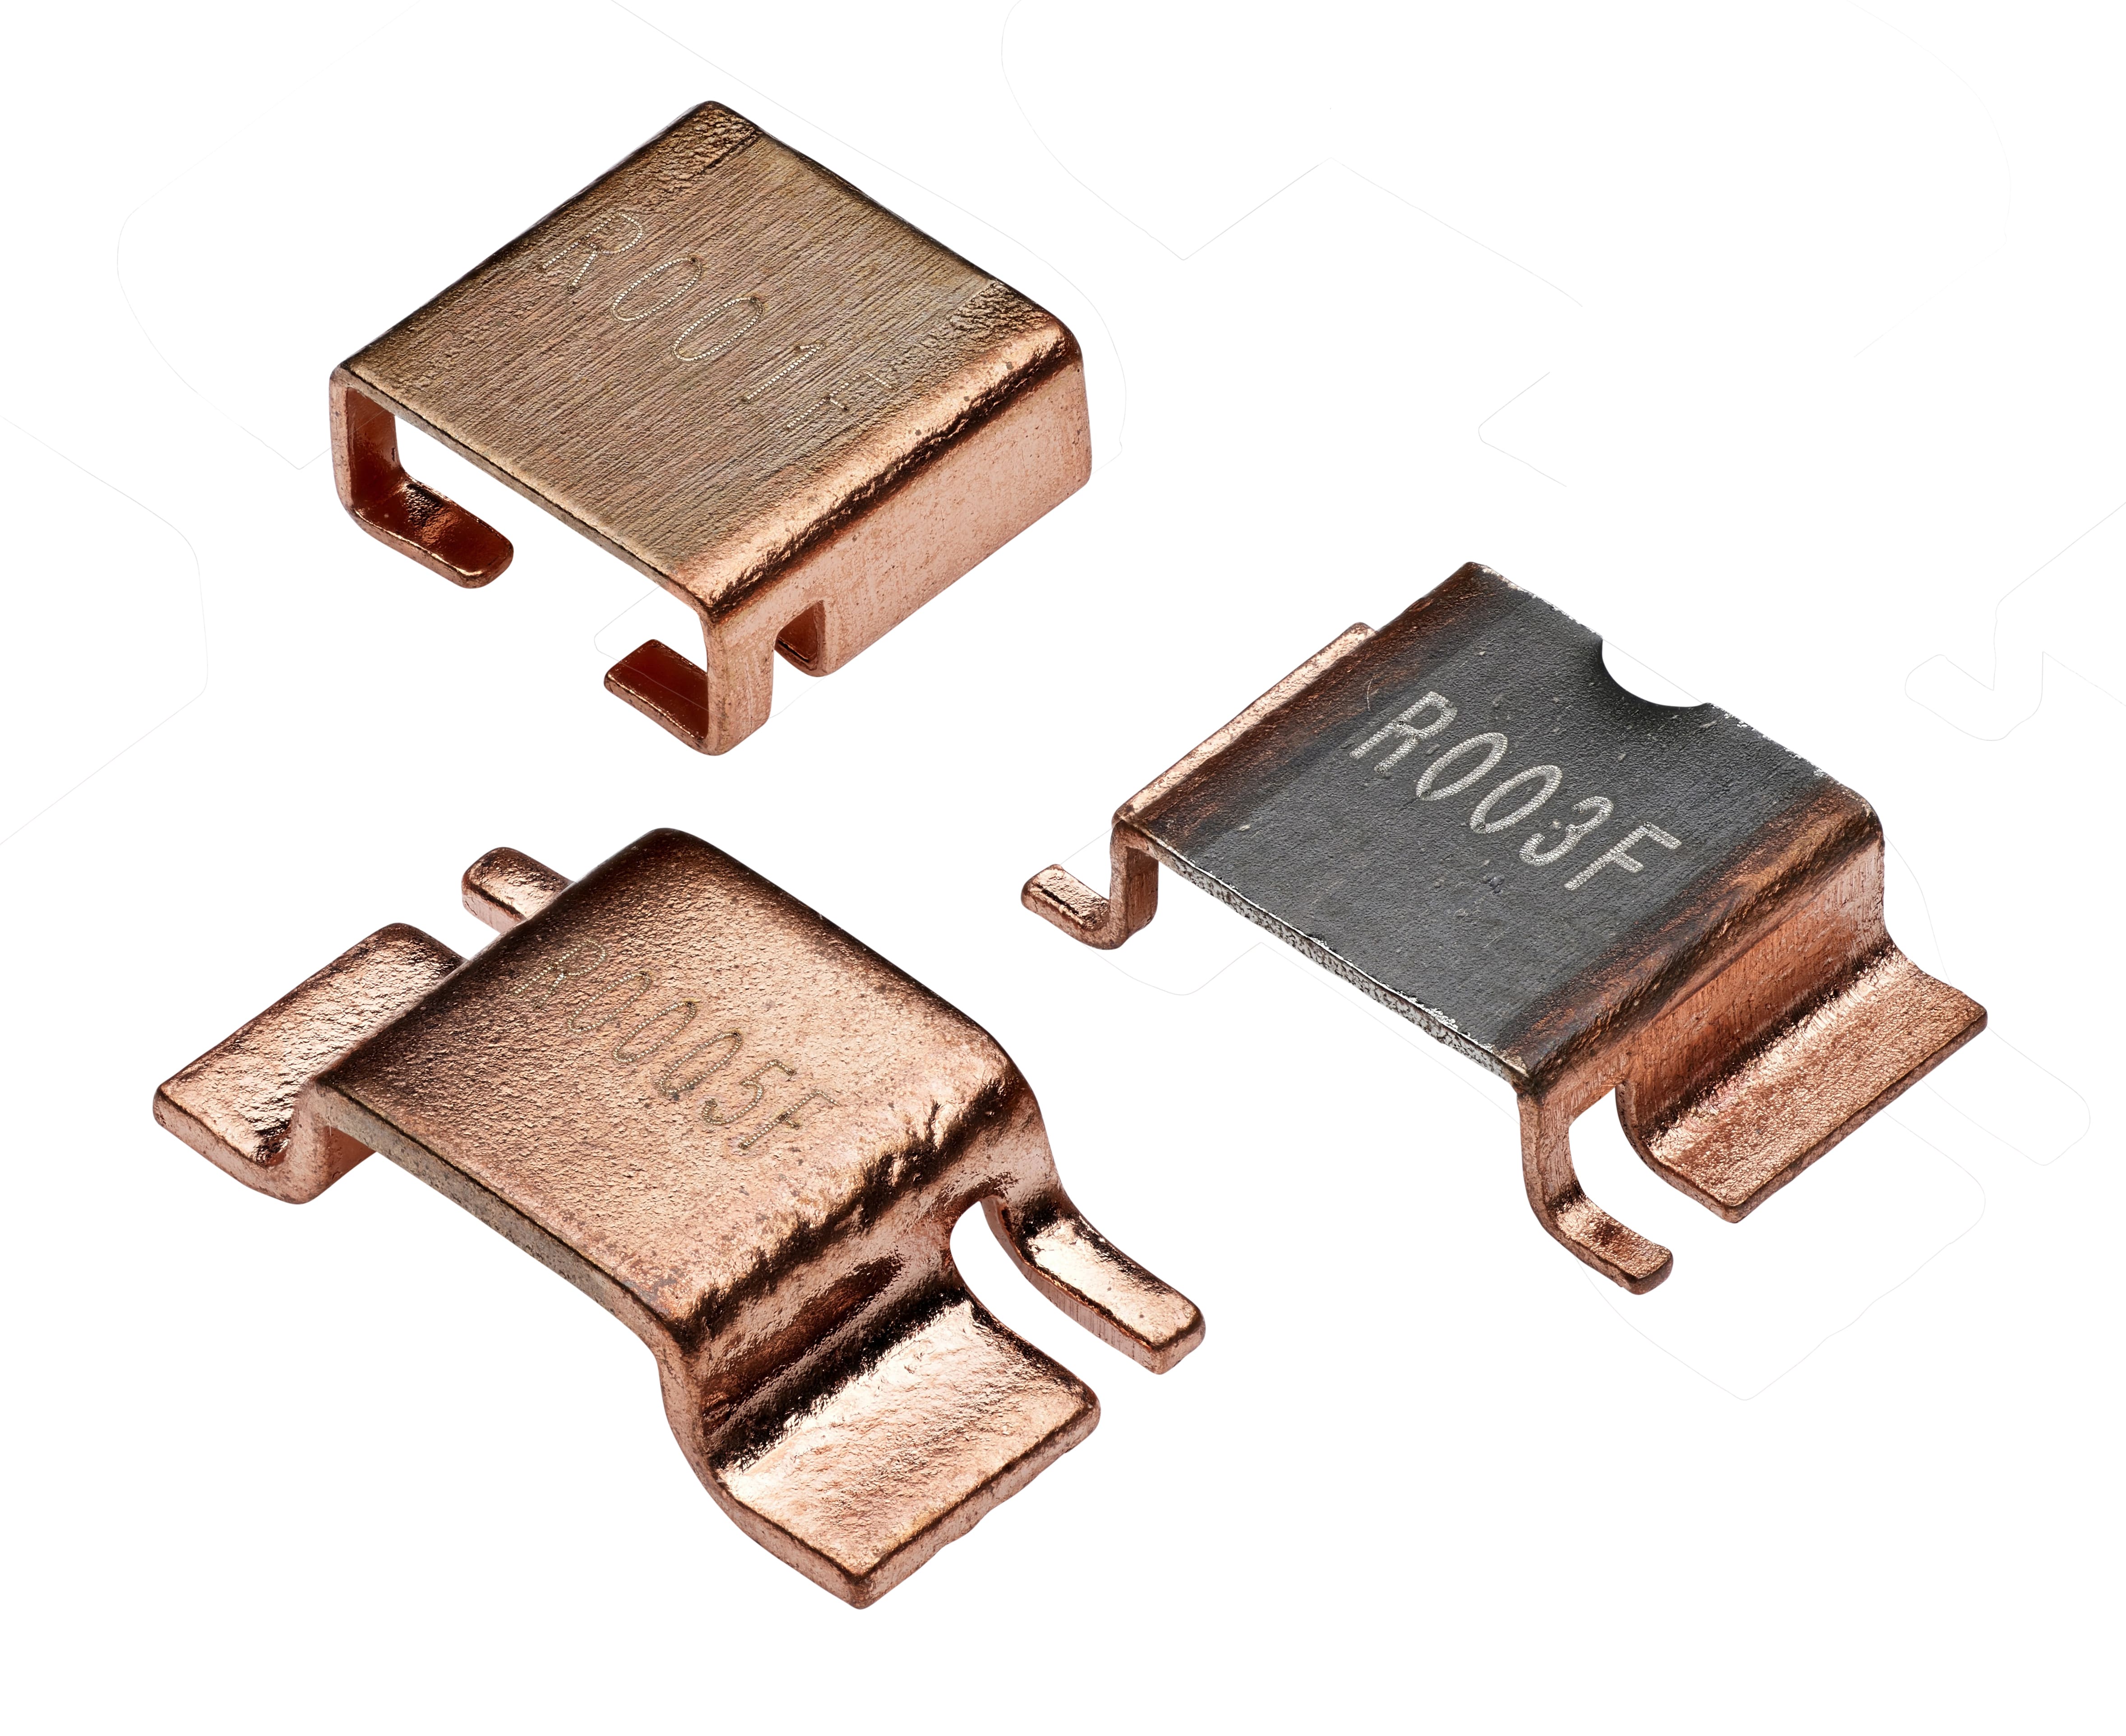 SMD 1/5watt .47ohms 1% 100ppm Current Sense Resistors 10 pieces 